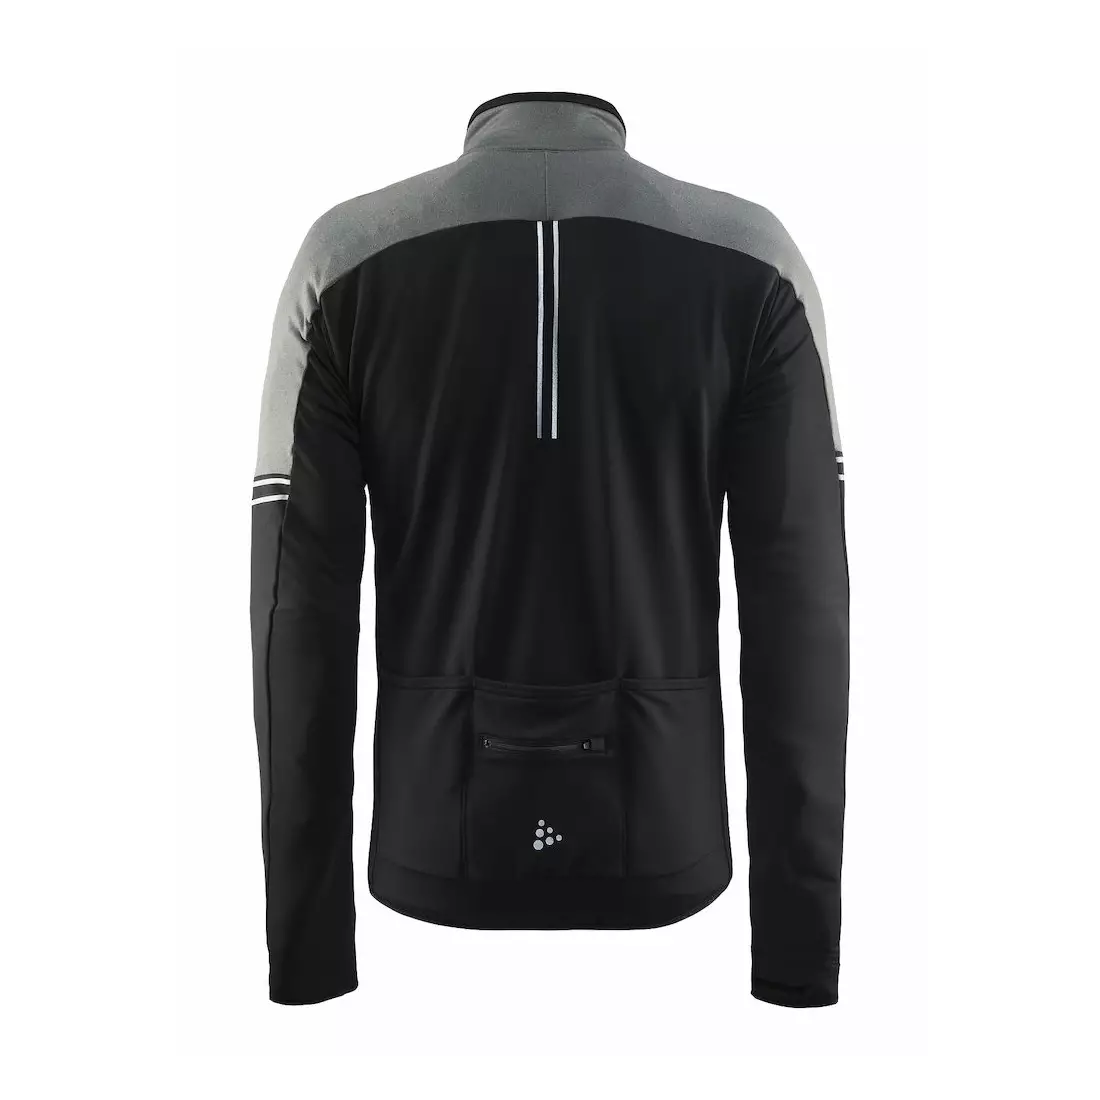 CRAFT VELO lightly insulated cycling sweatshirt 1904441-2975